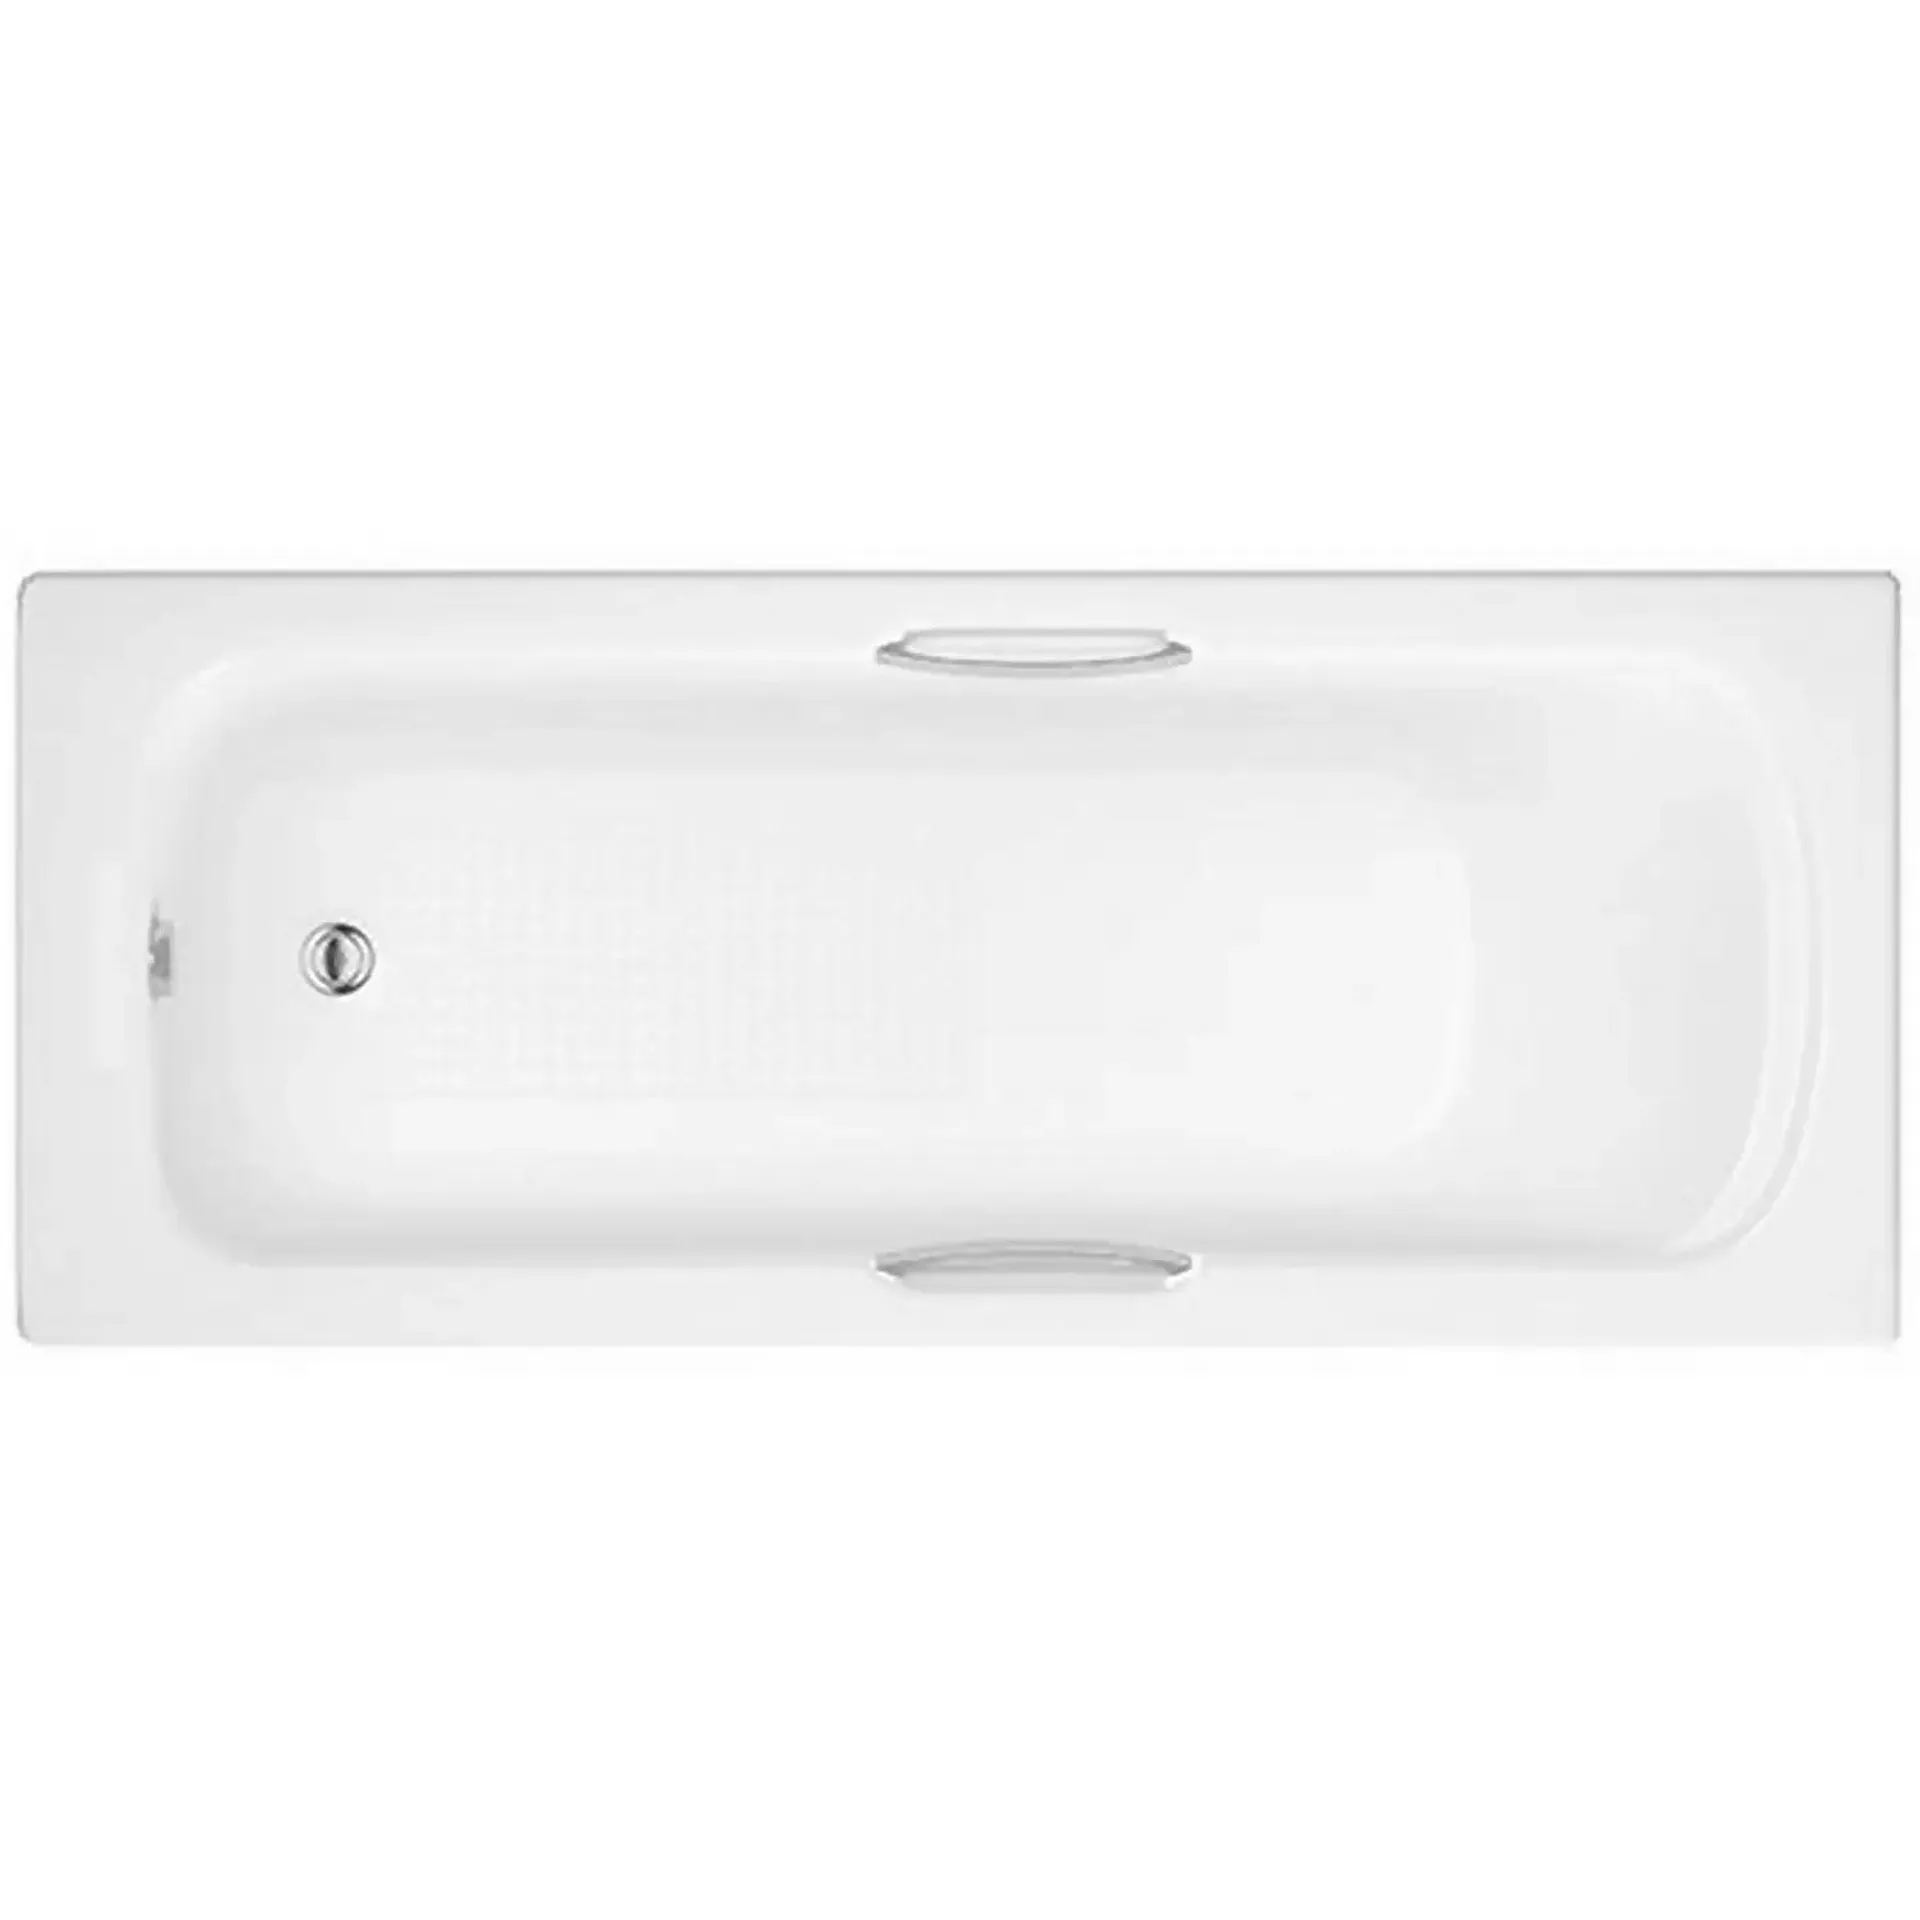 Claro White Straight Bath with Grips - 1675 x 700mm